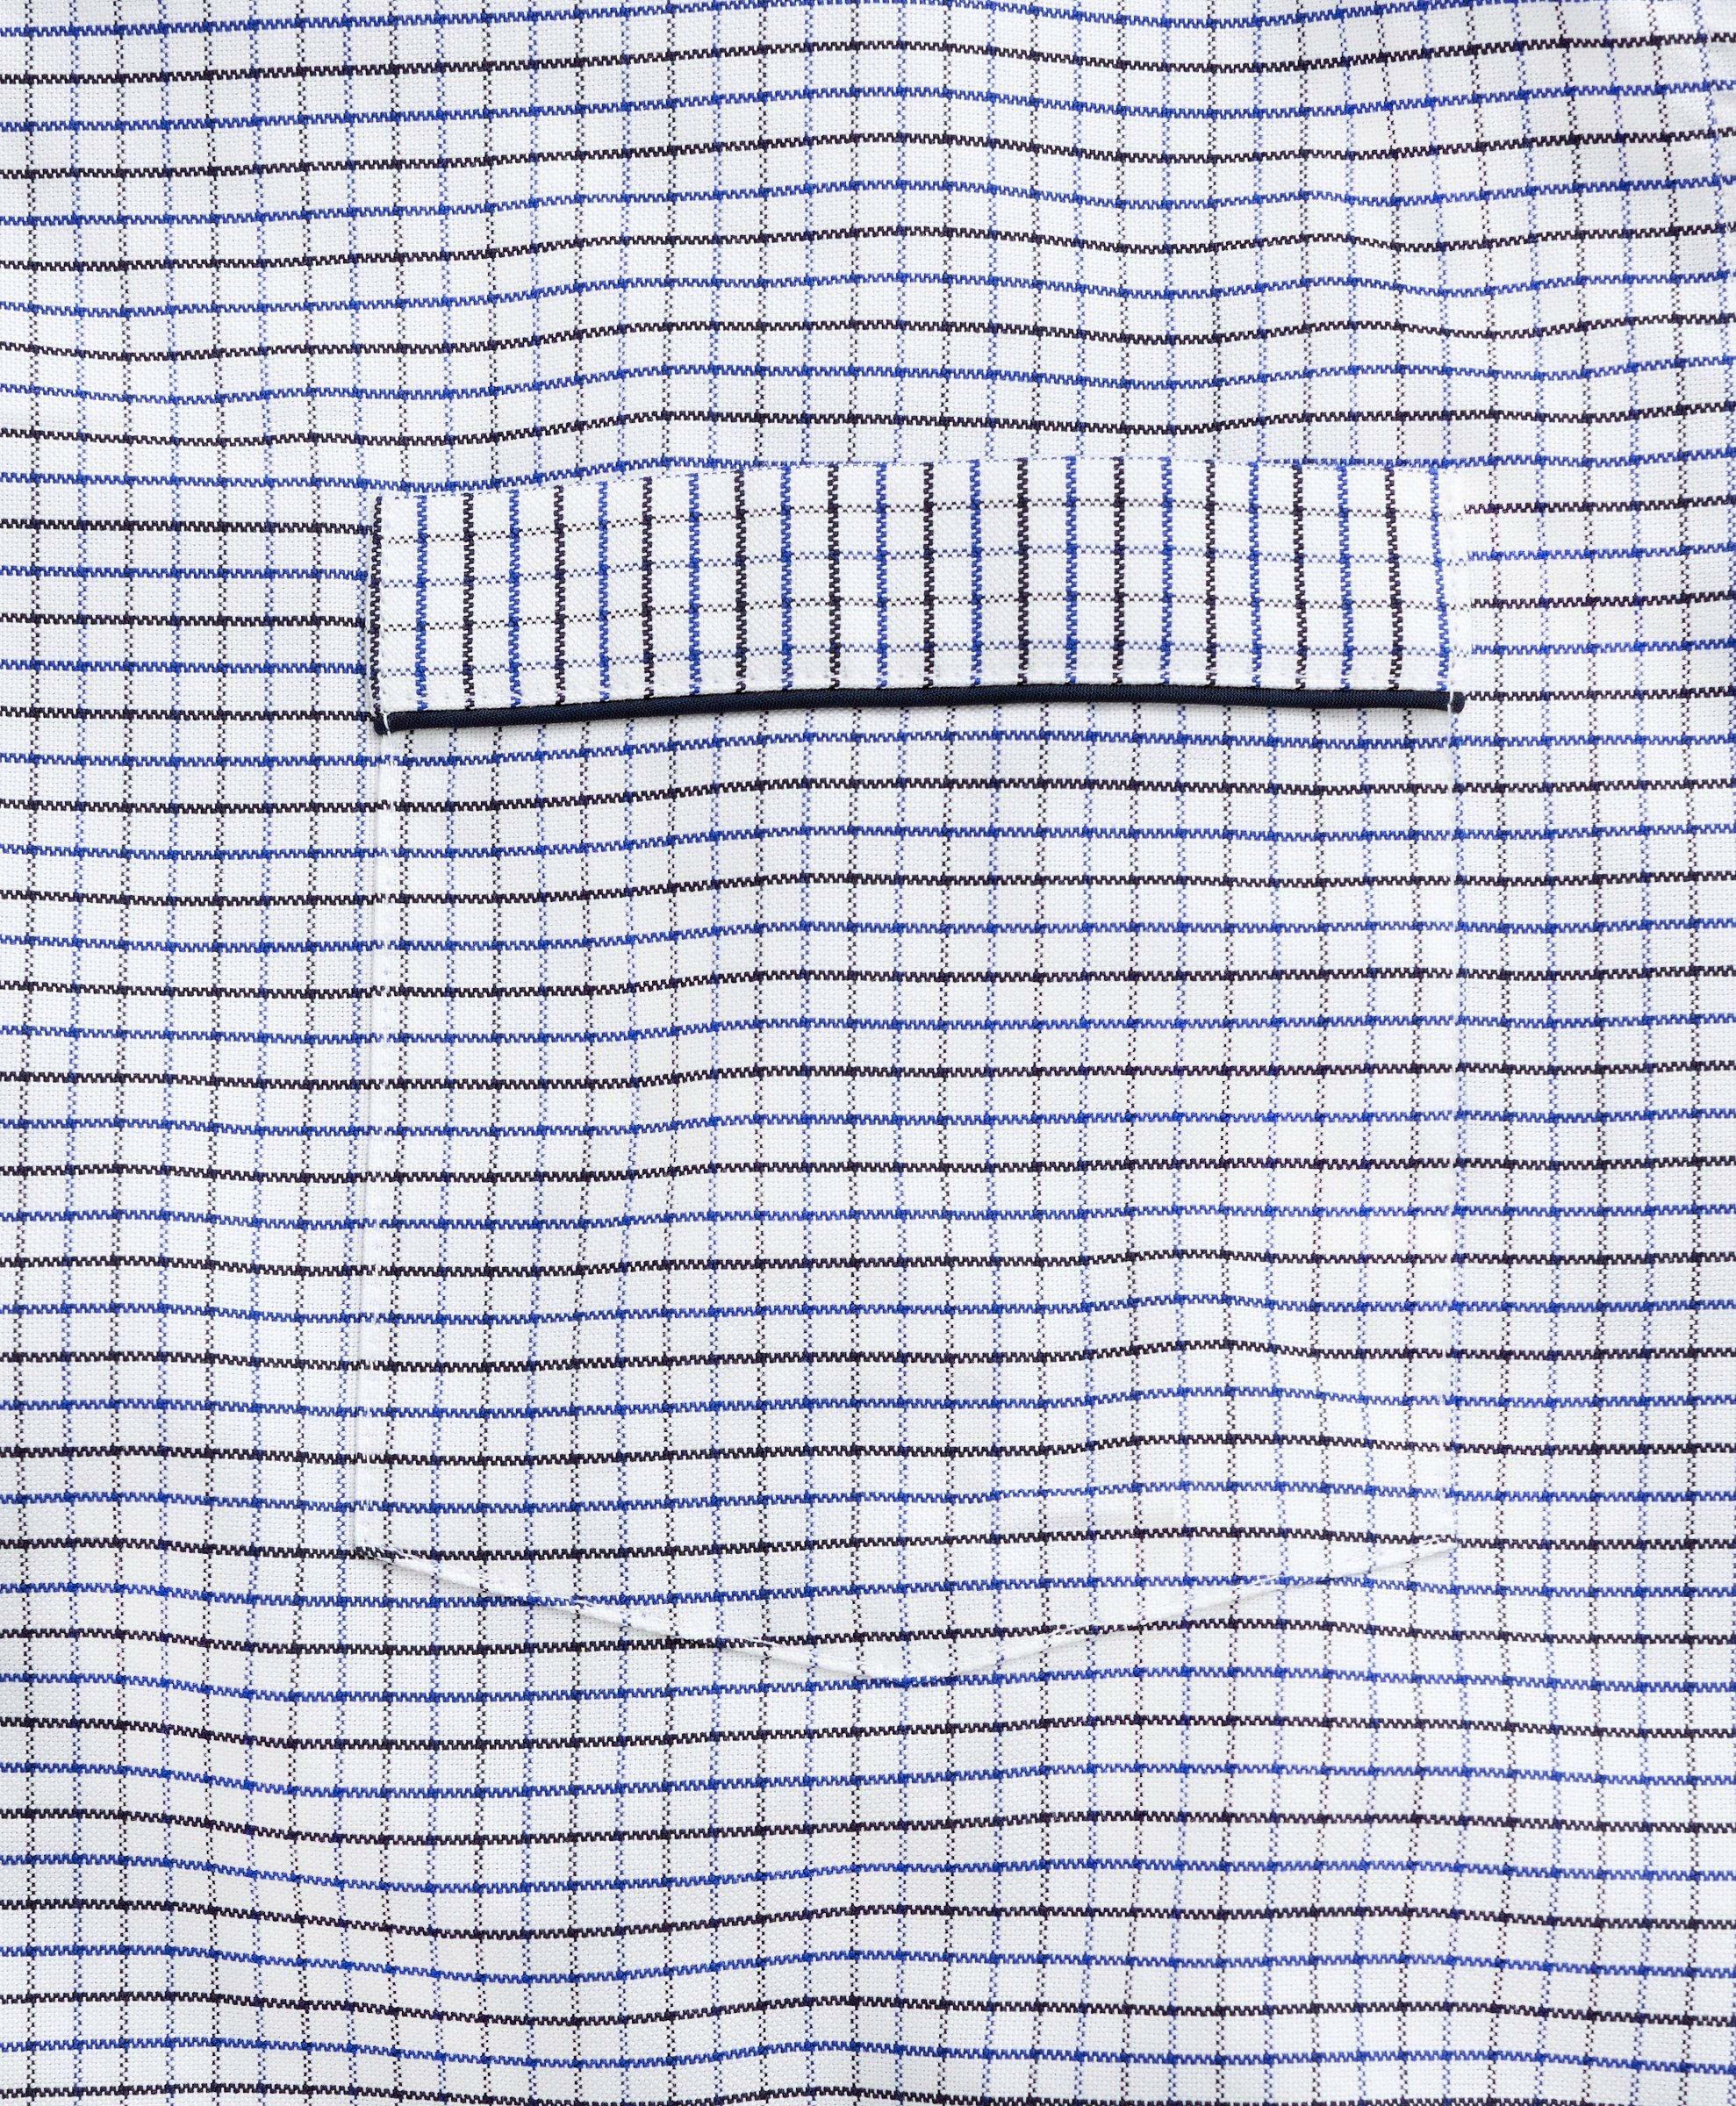 Brooks Brothers Men's Oxford Cotton Tattersall Pajamas | Blue